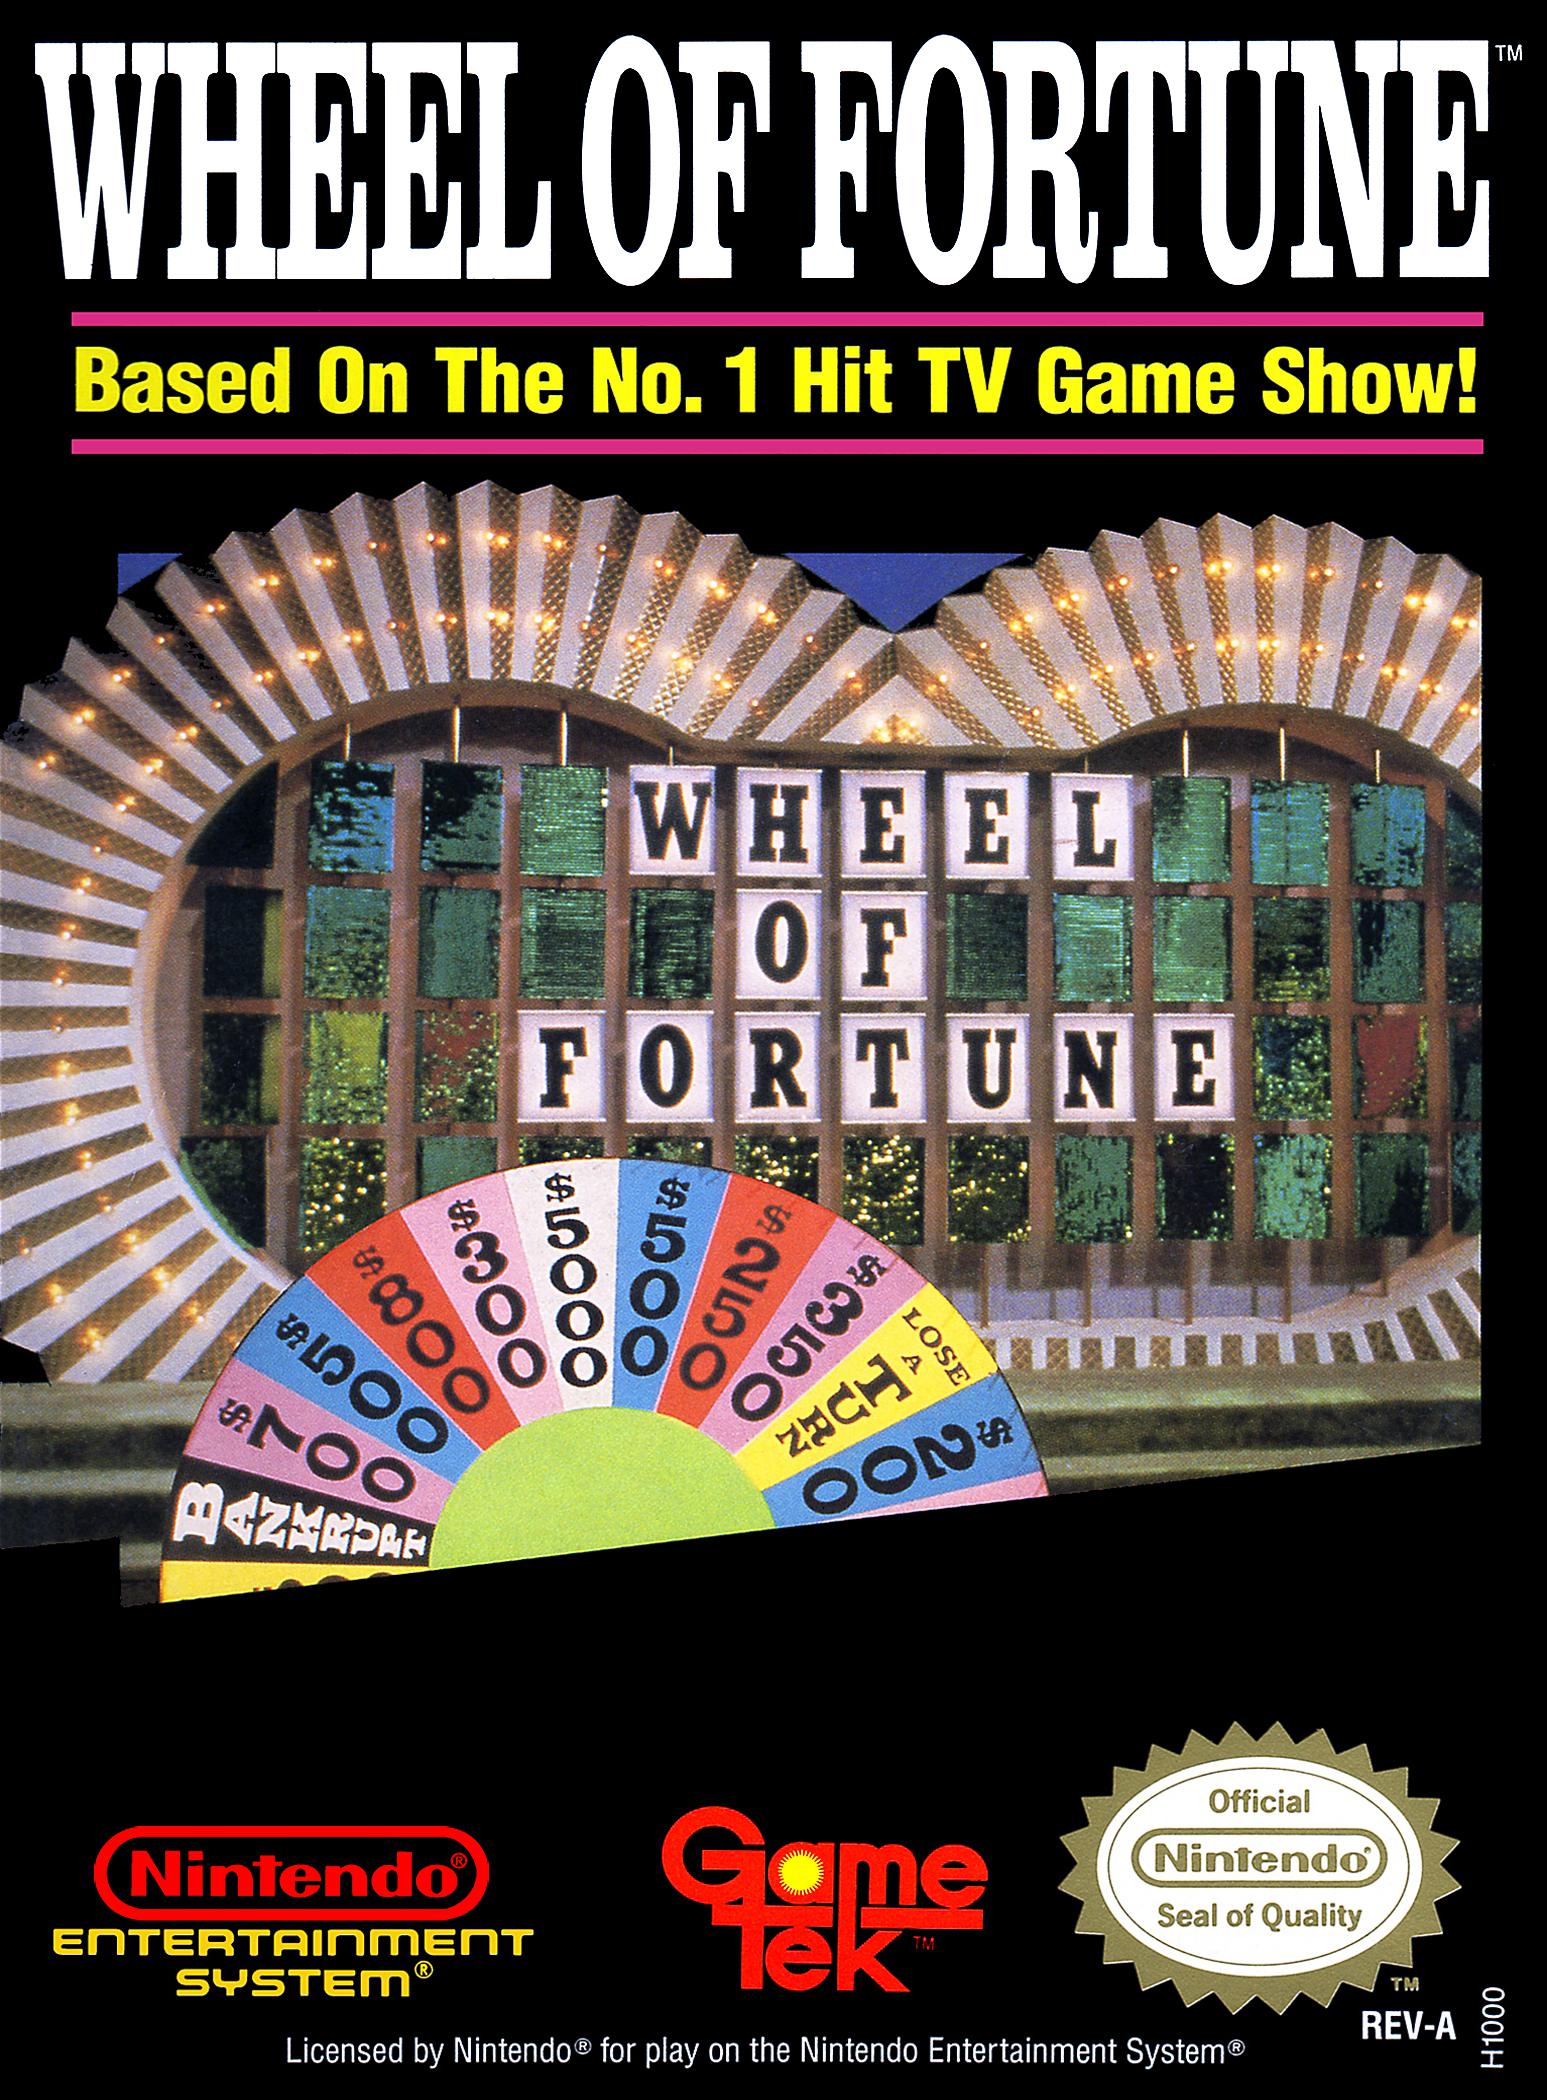 Wheel of fortune celebrity